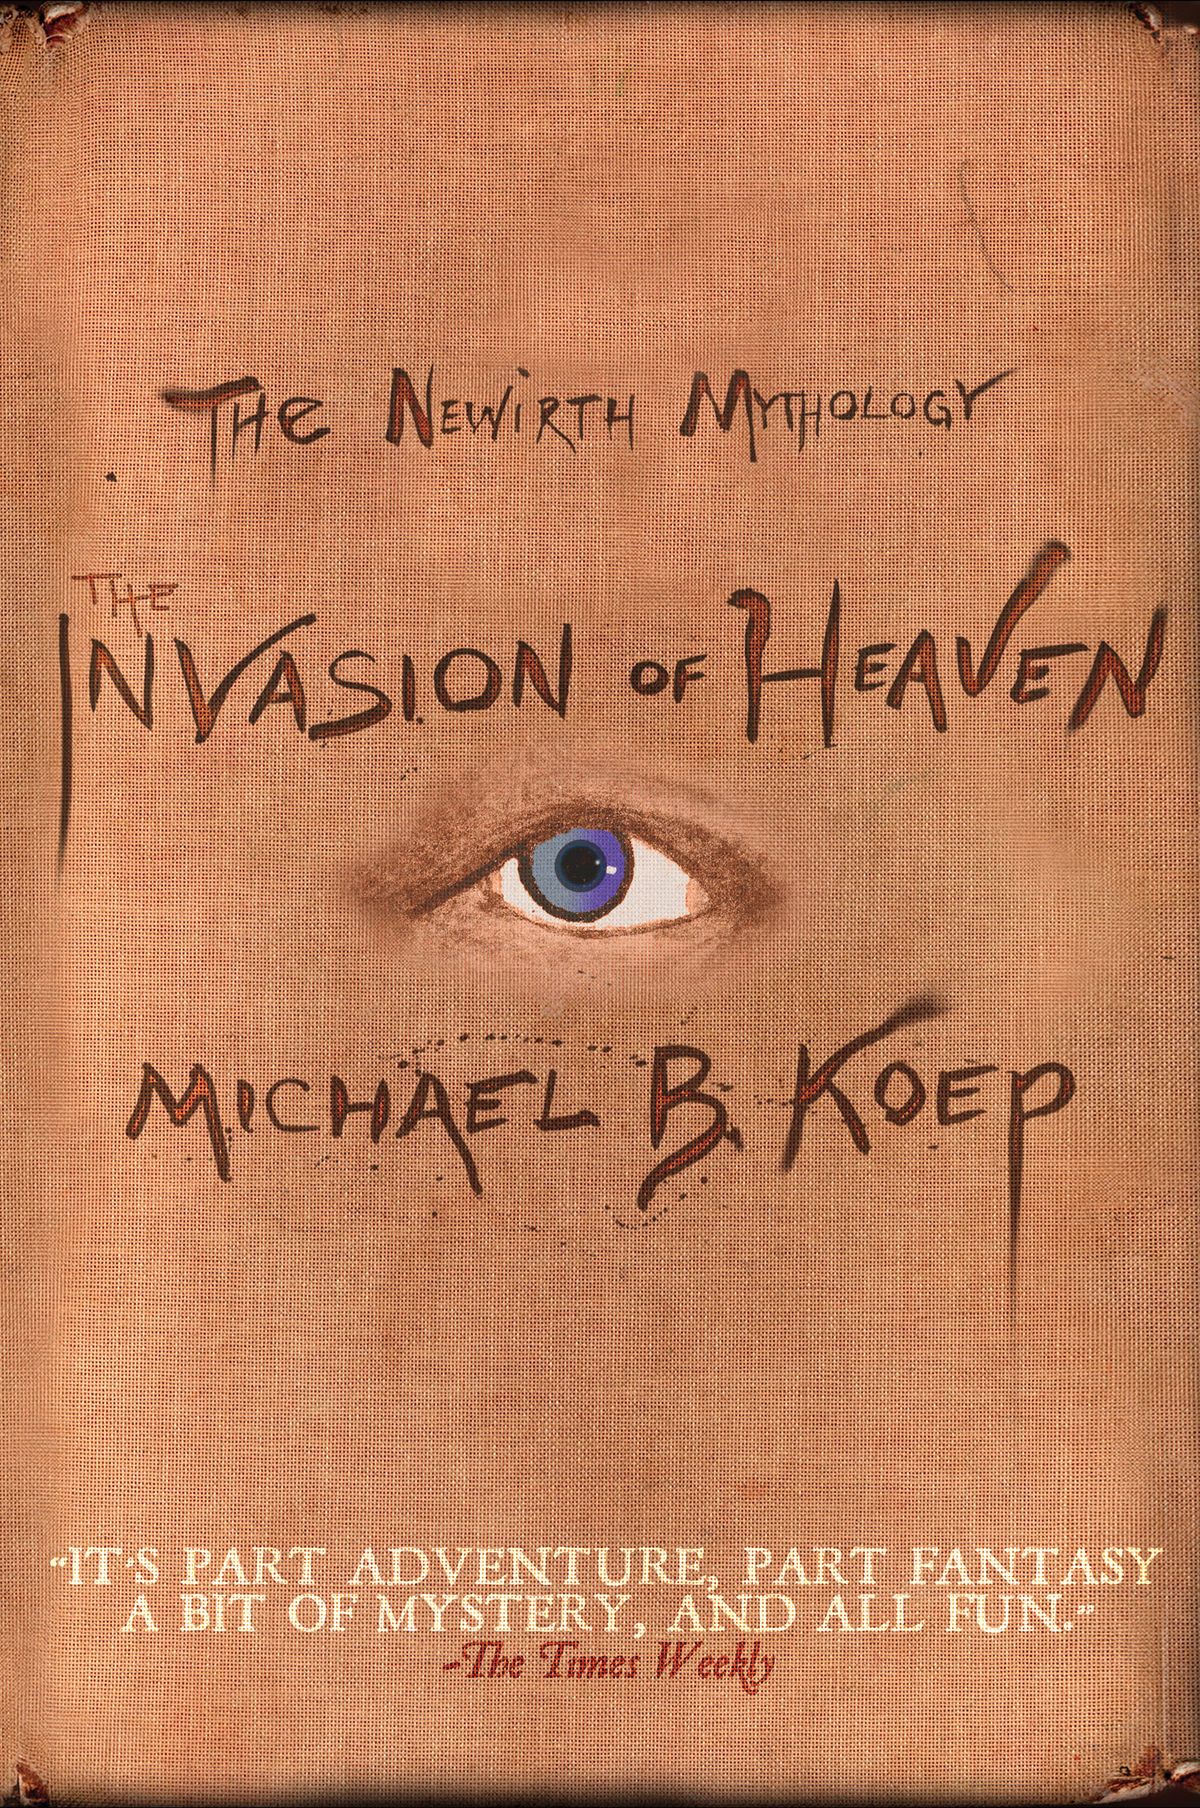 Michael Koep’s “The Invasion of Heaven”  (Courtesy)